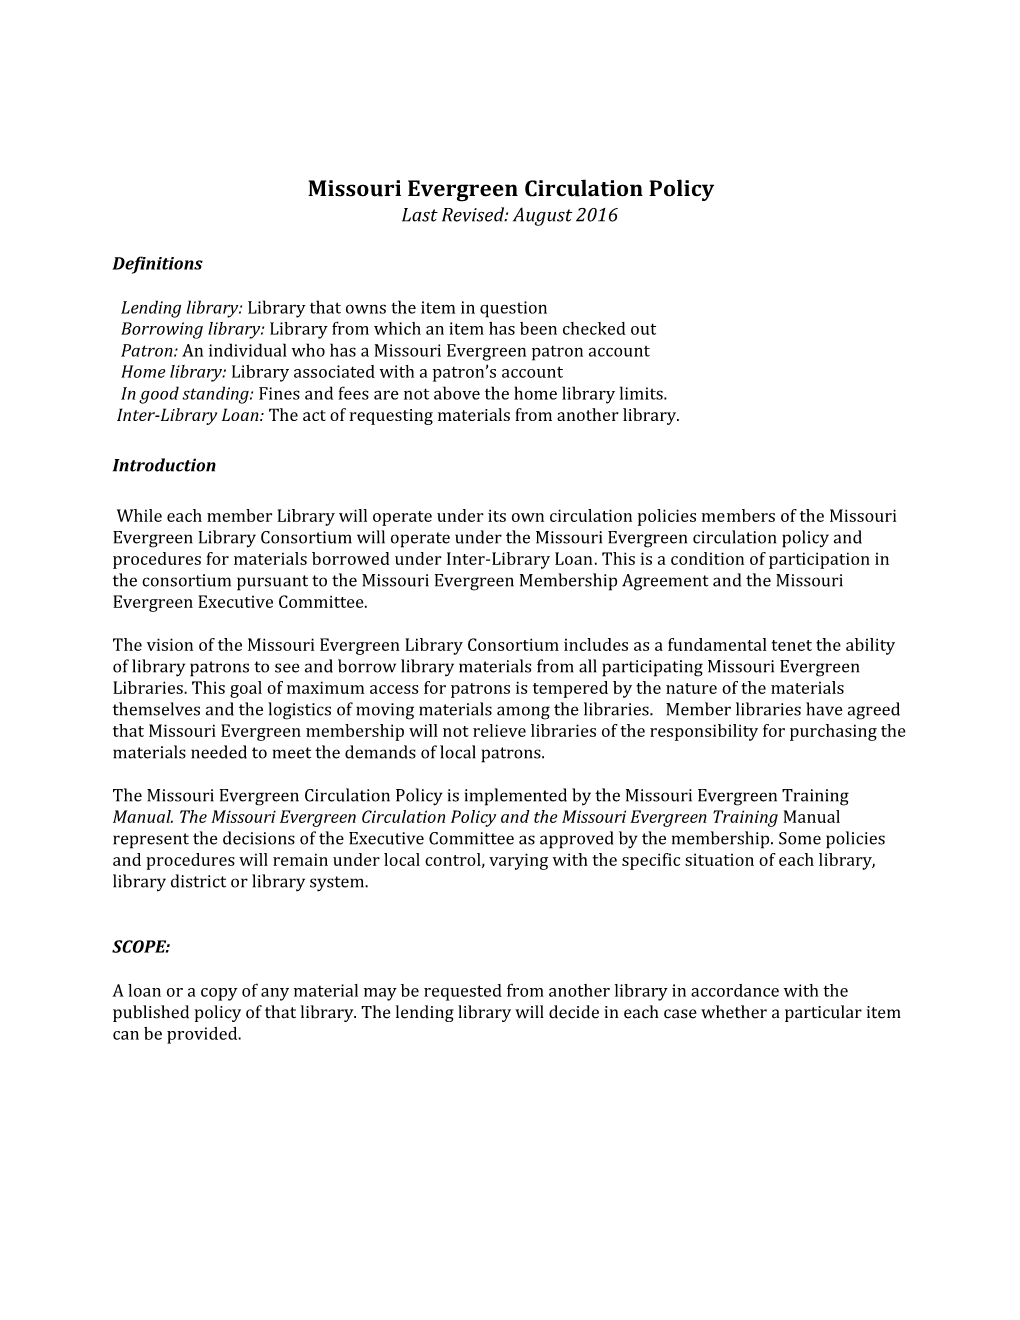 Missouri Evergreencirculation Policy